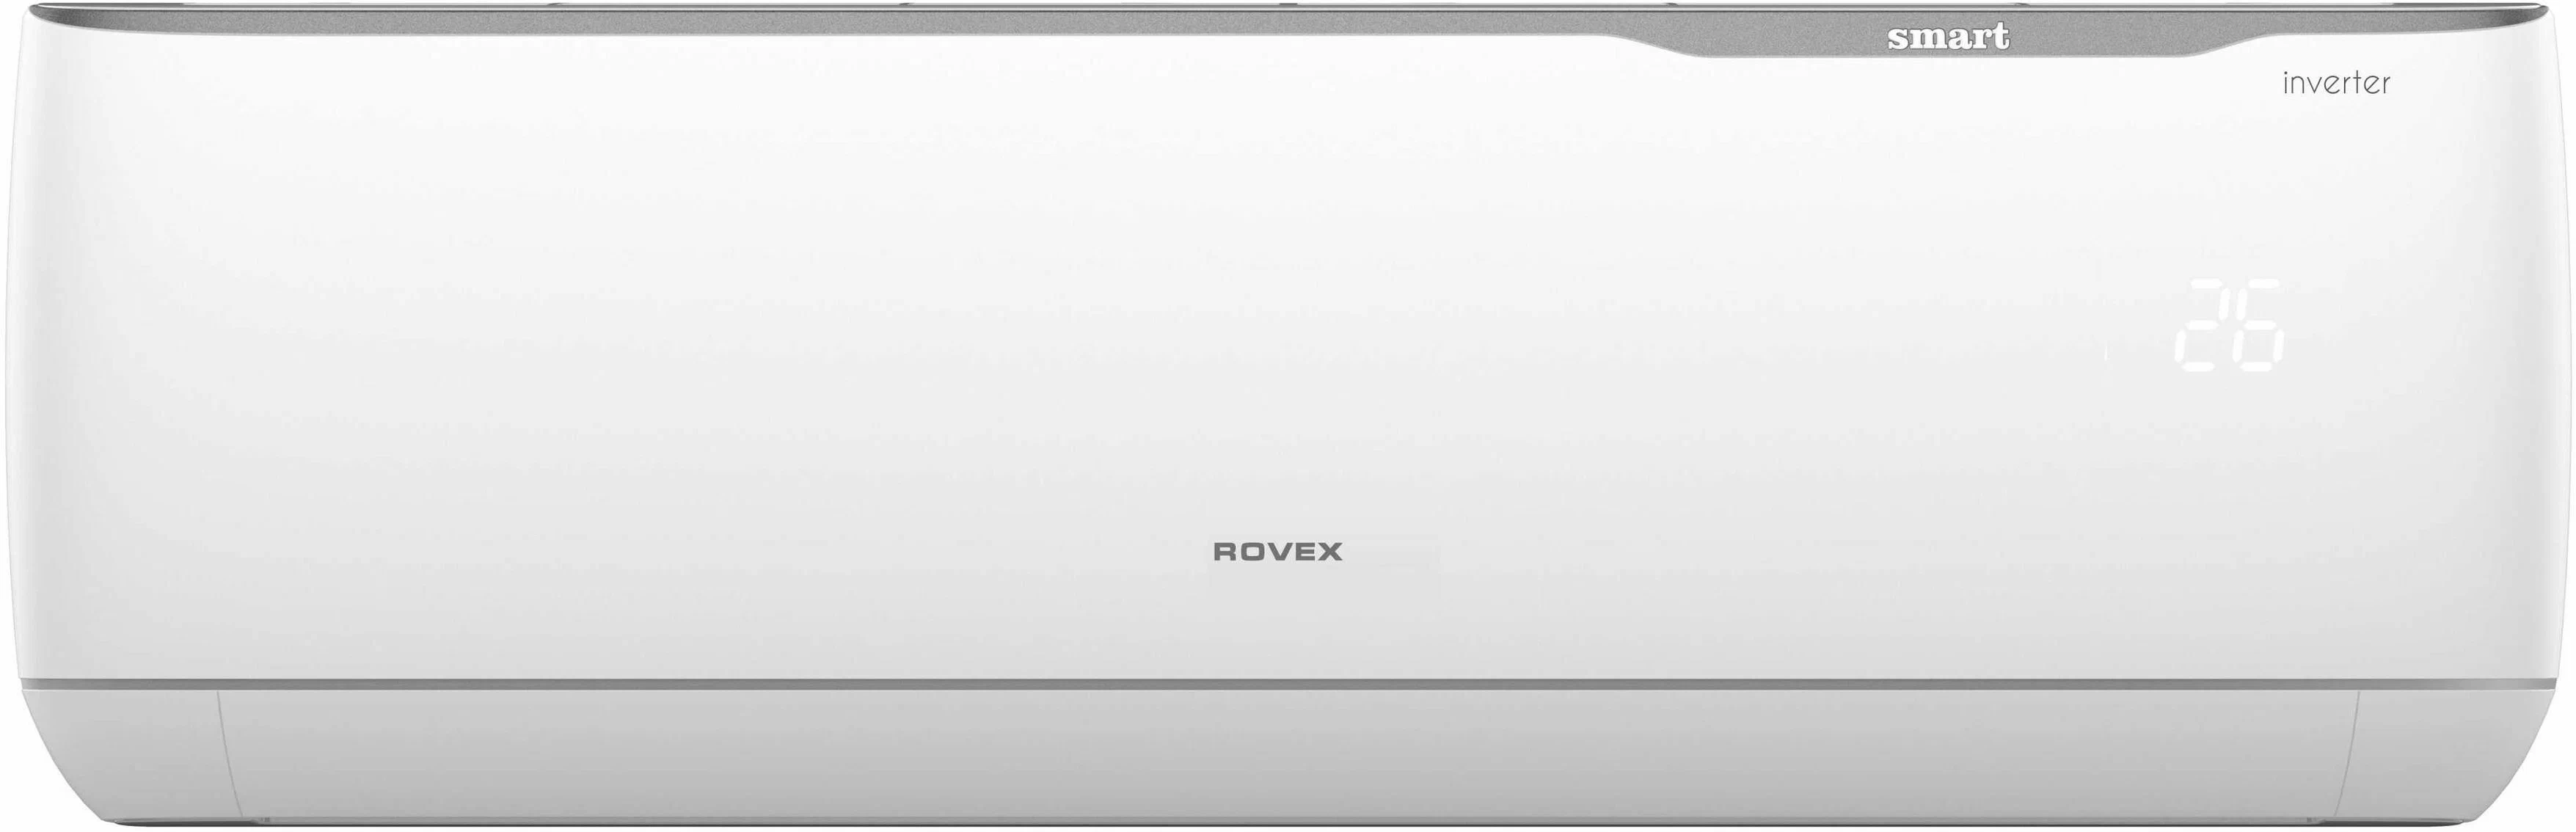 Сплит-система Rovex RS-24PXI2 Smart Inverter комплект (белый)